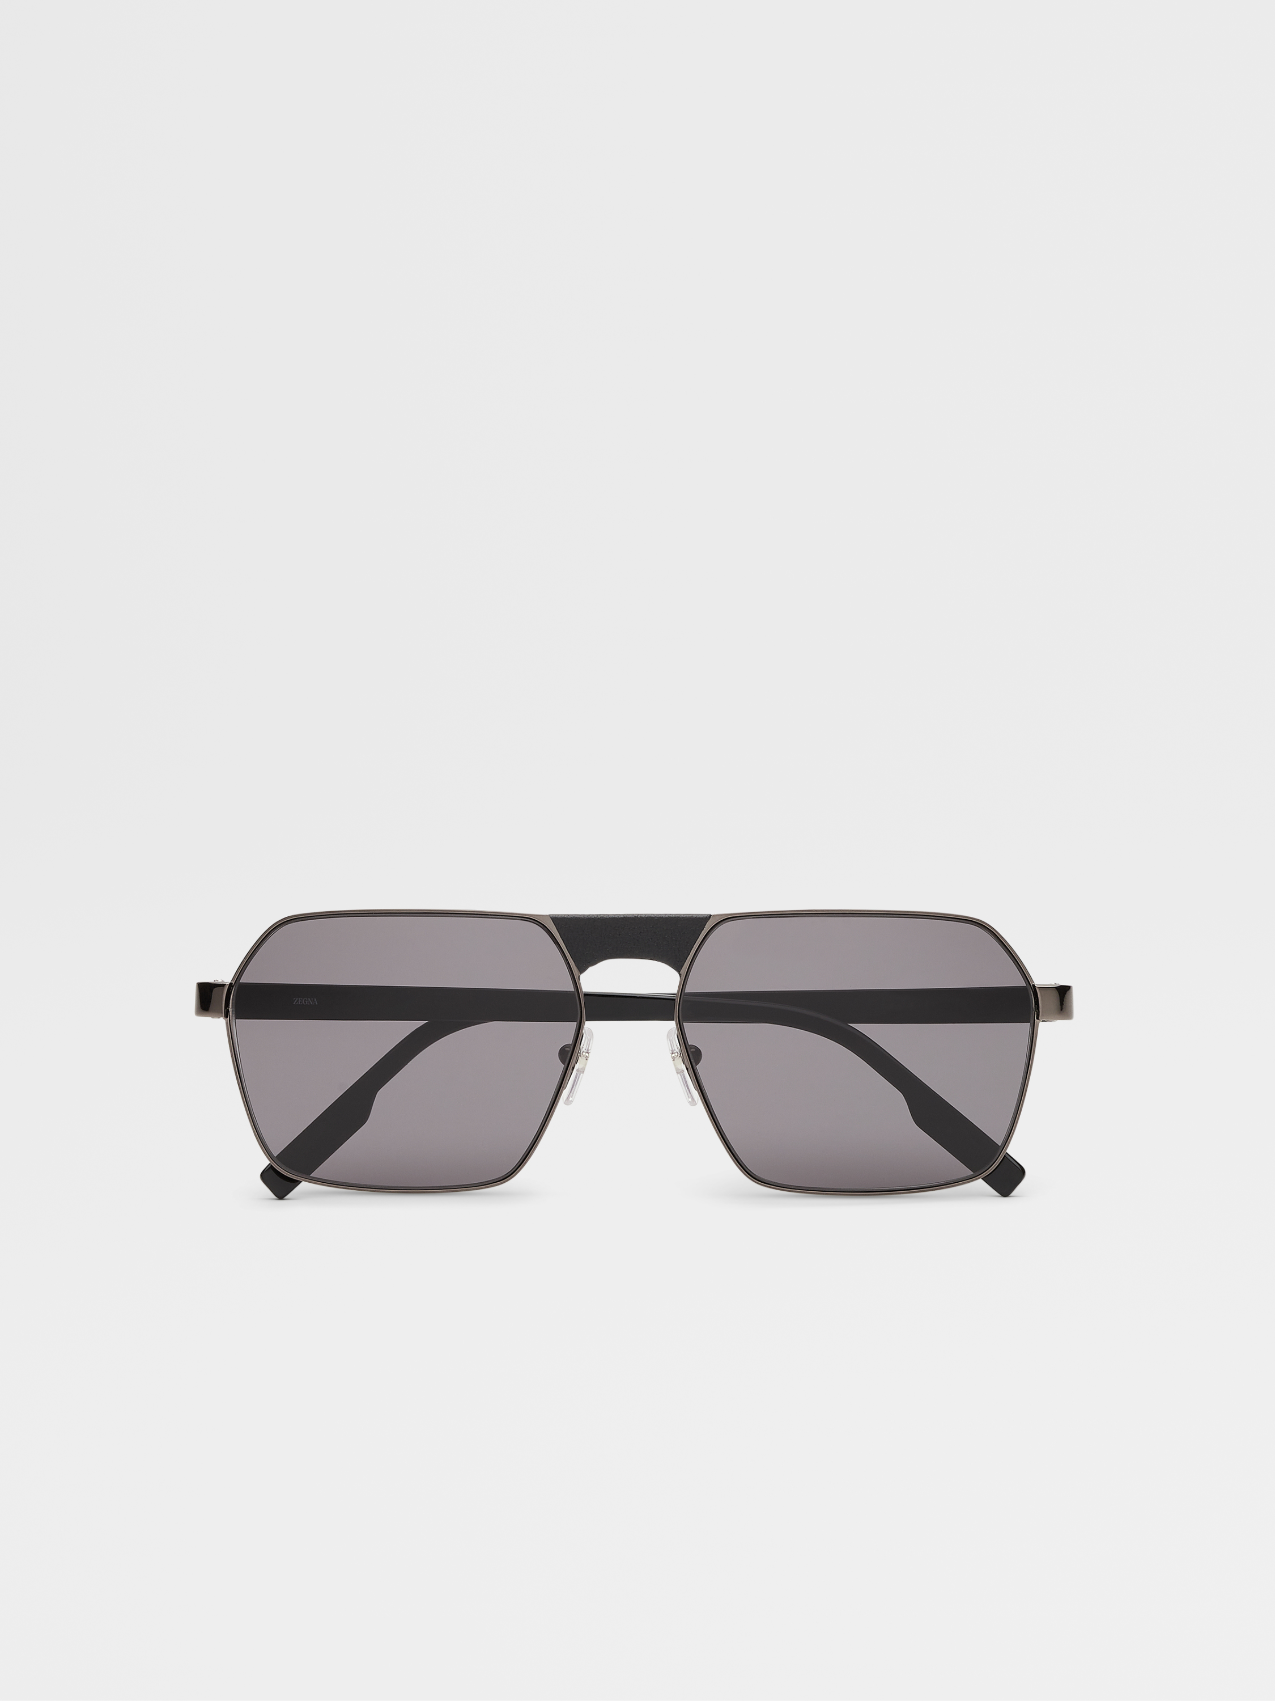 Shiny Gunmetal with Black Acetate Temple Leggerissimo Sunglasses